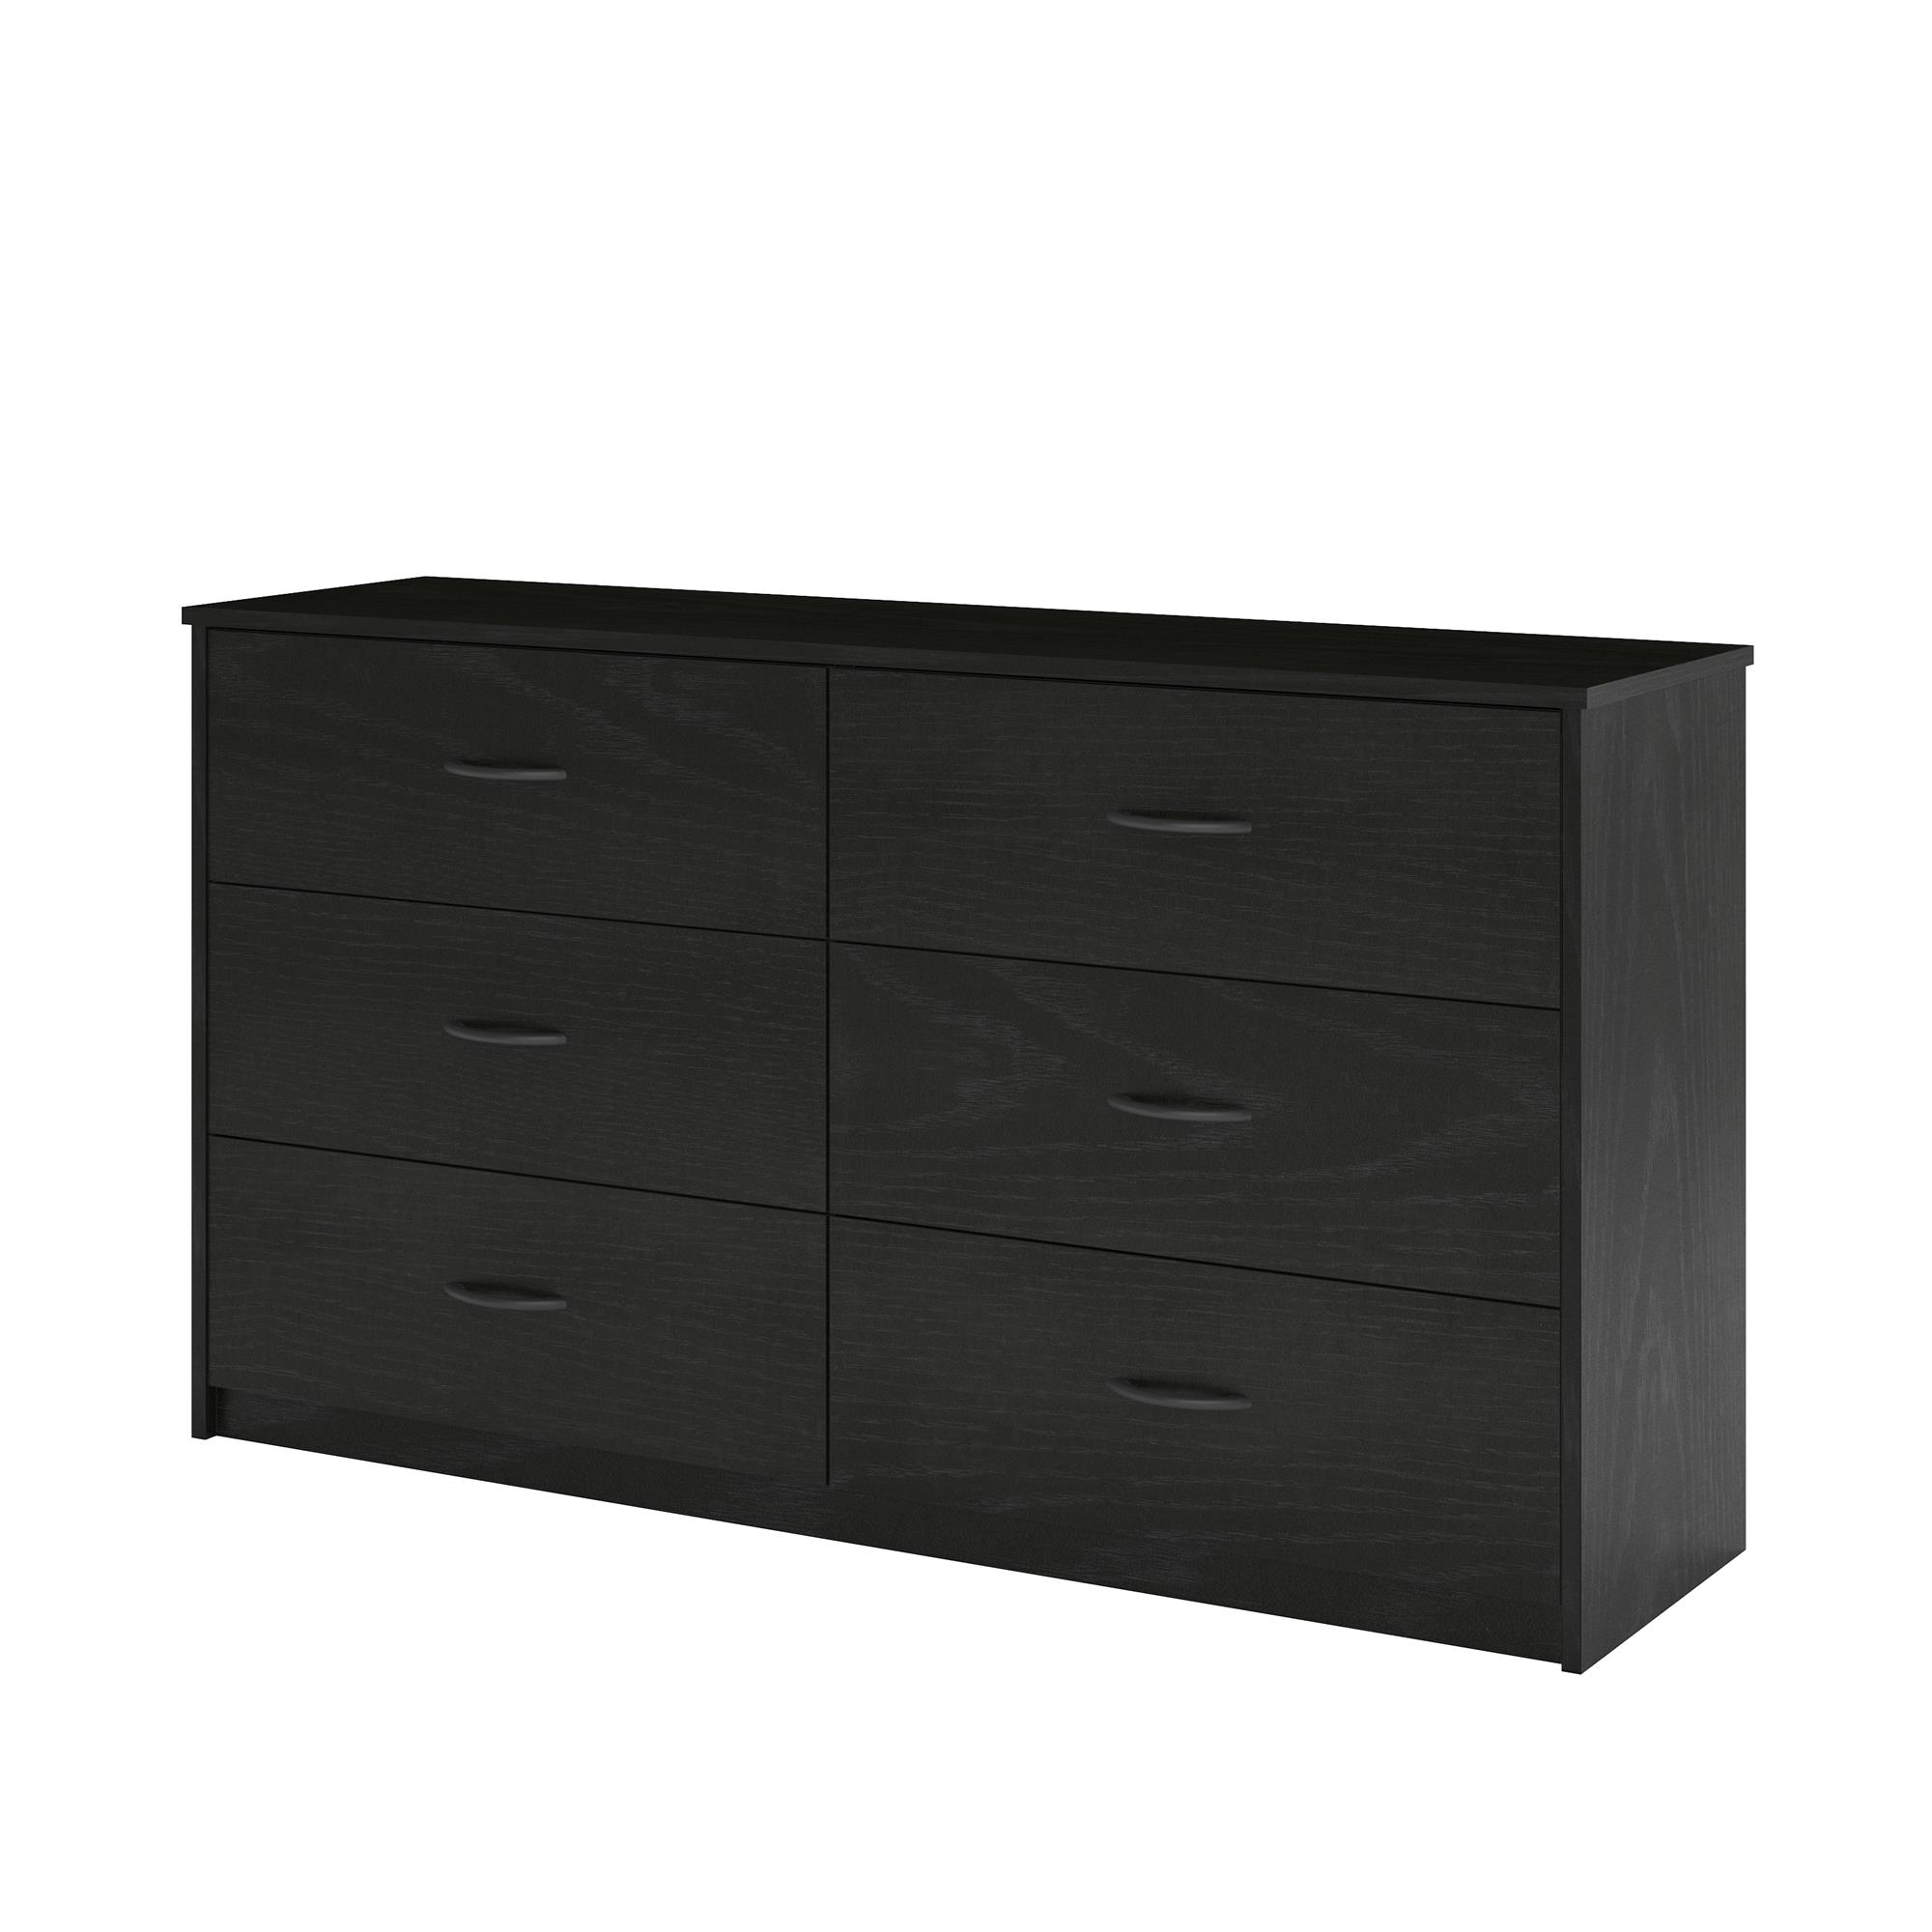 Mainstays Classic 6 Drawer Dresser, Black Oak - image 2 of 19